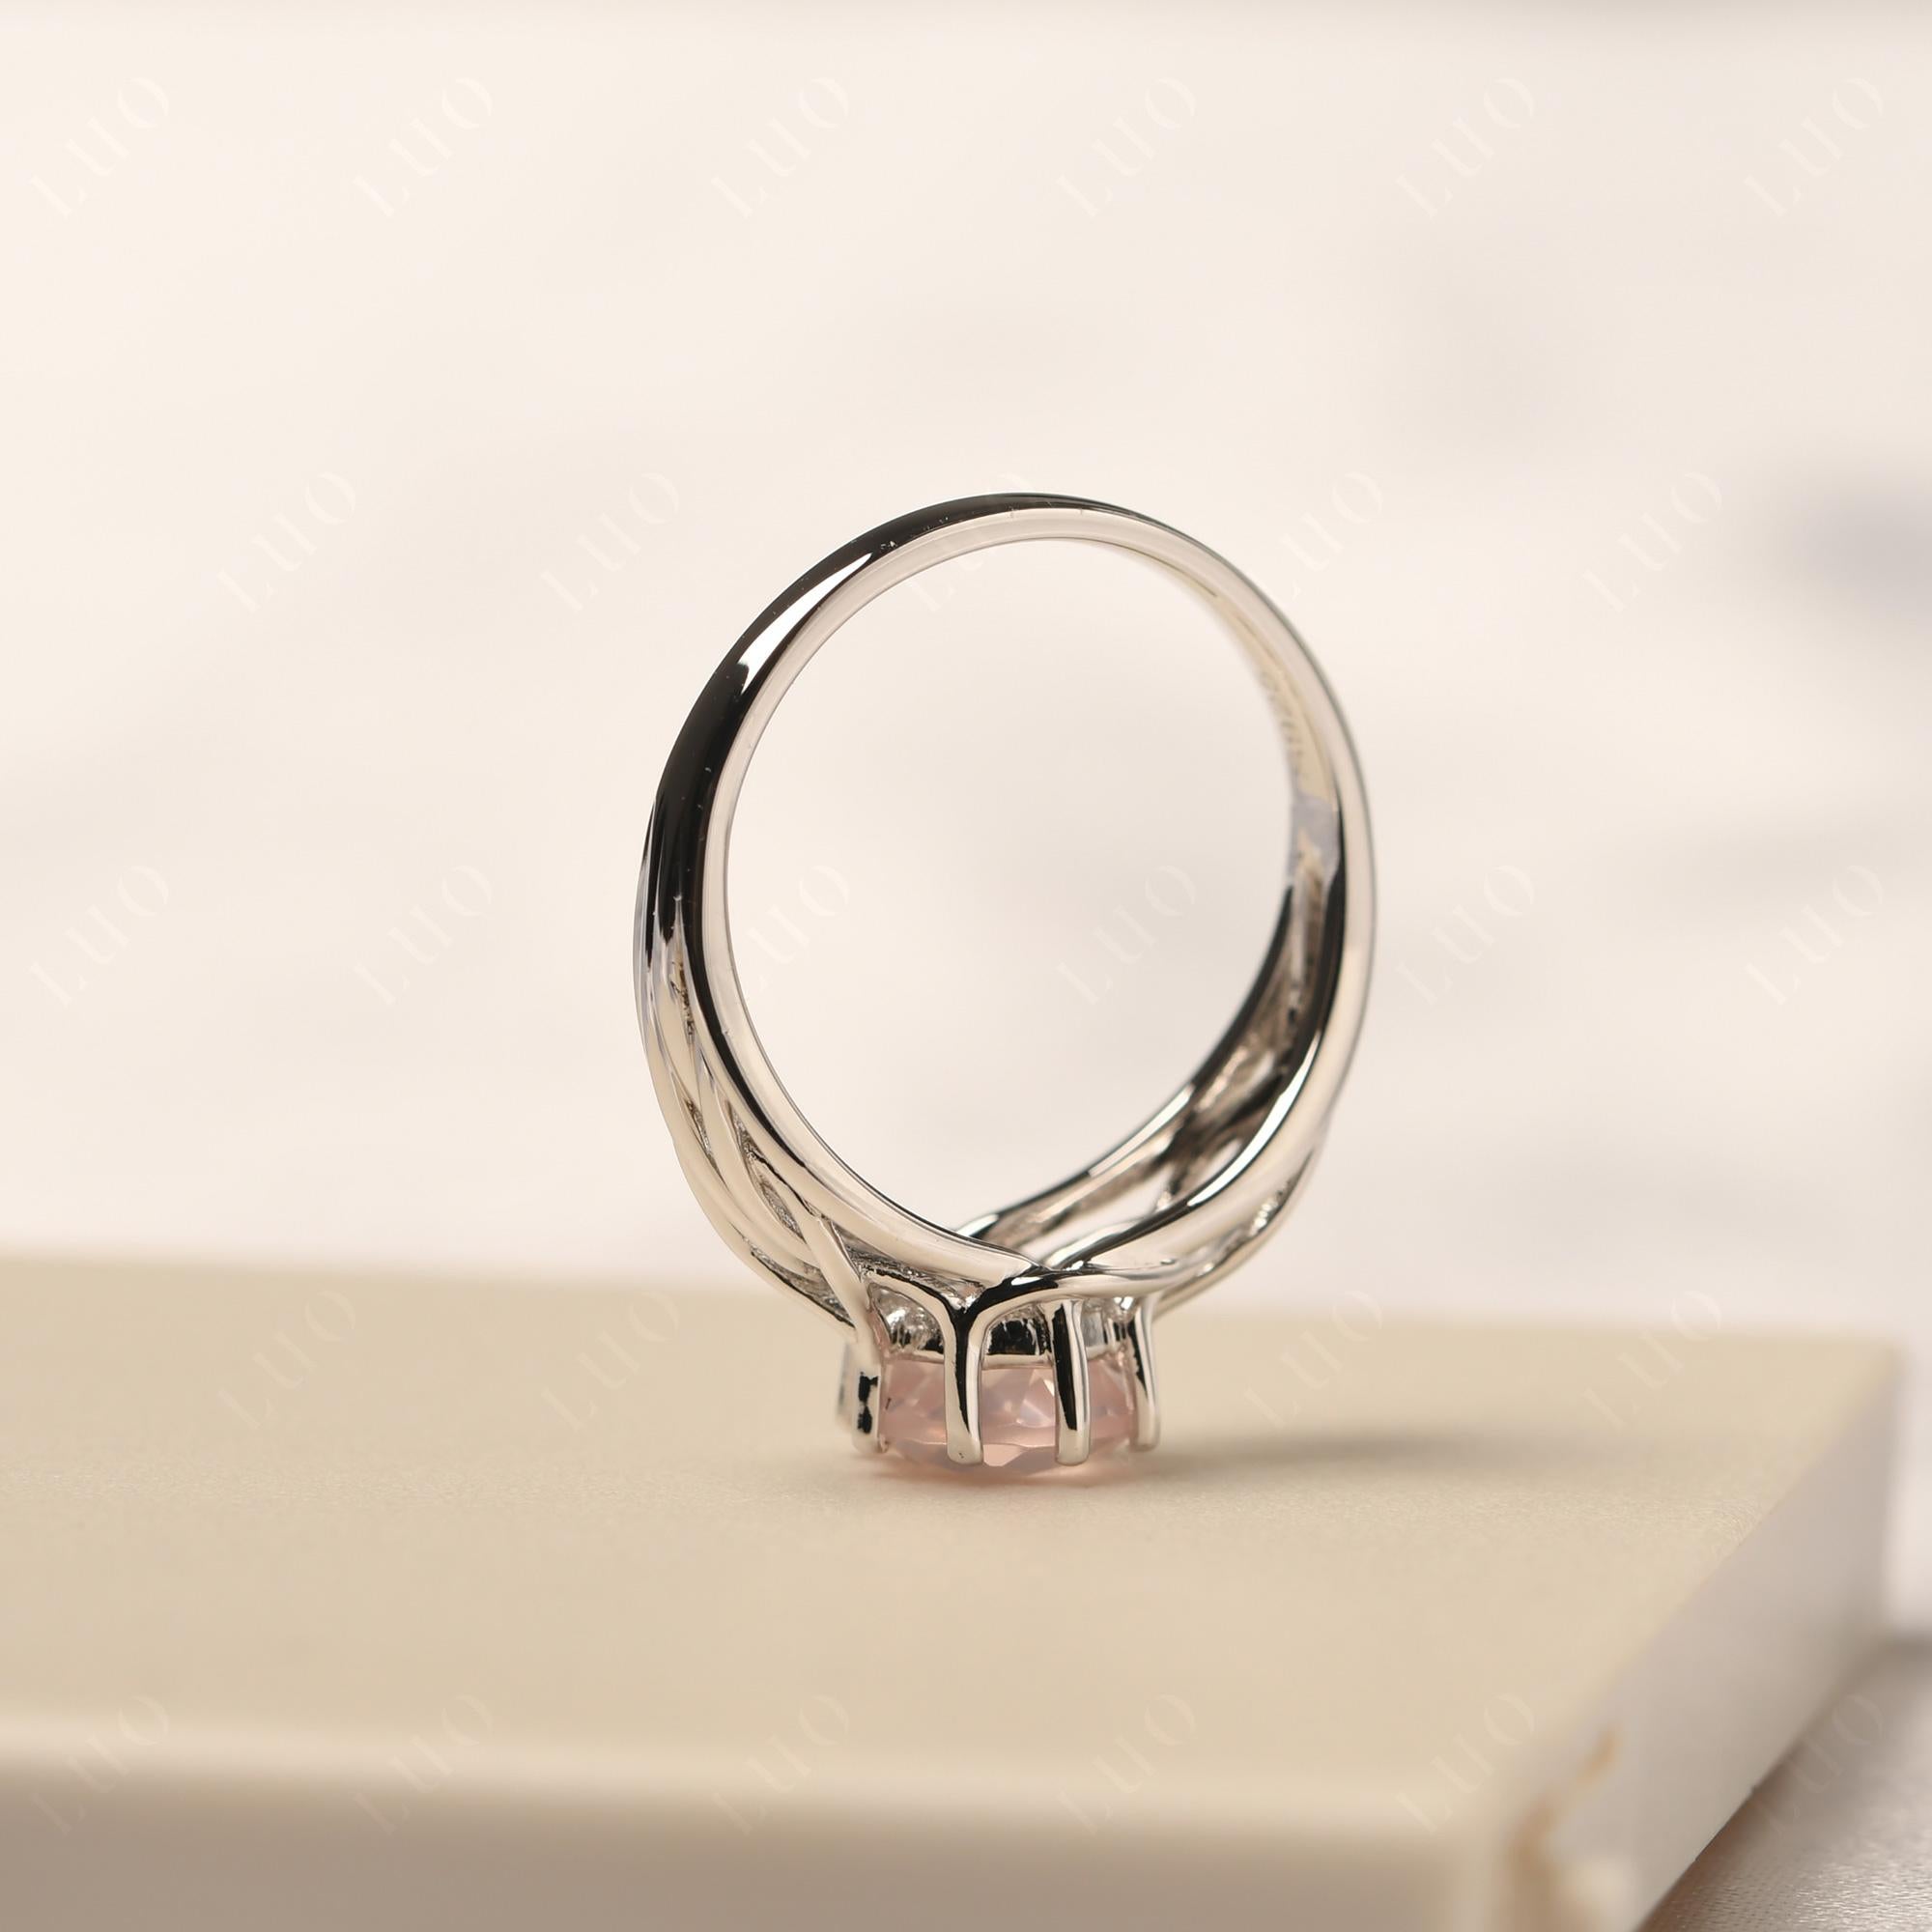 Intertwined Rose Quartz Wedding Ring - LUO Jewelry